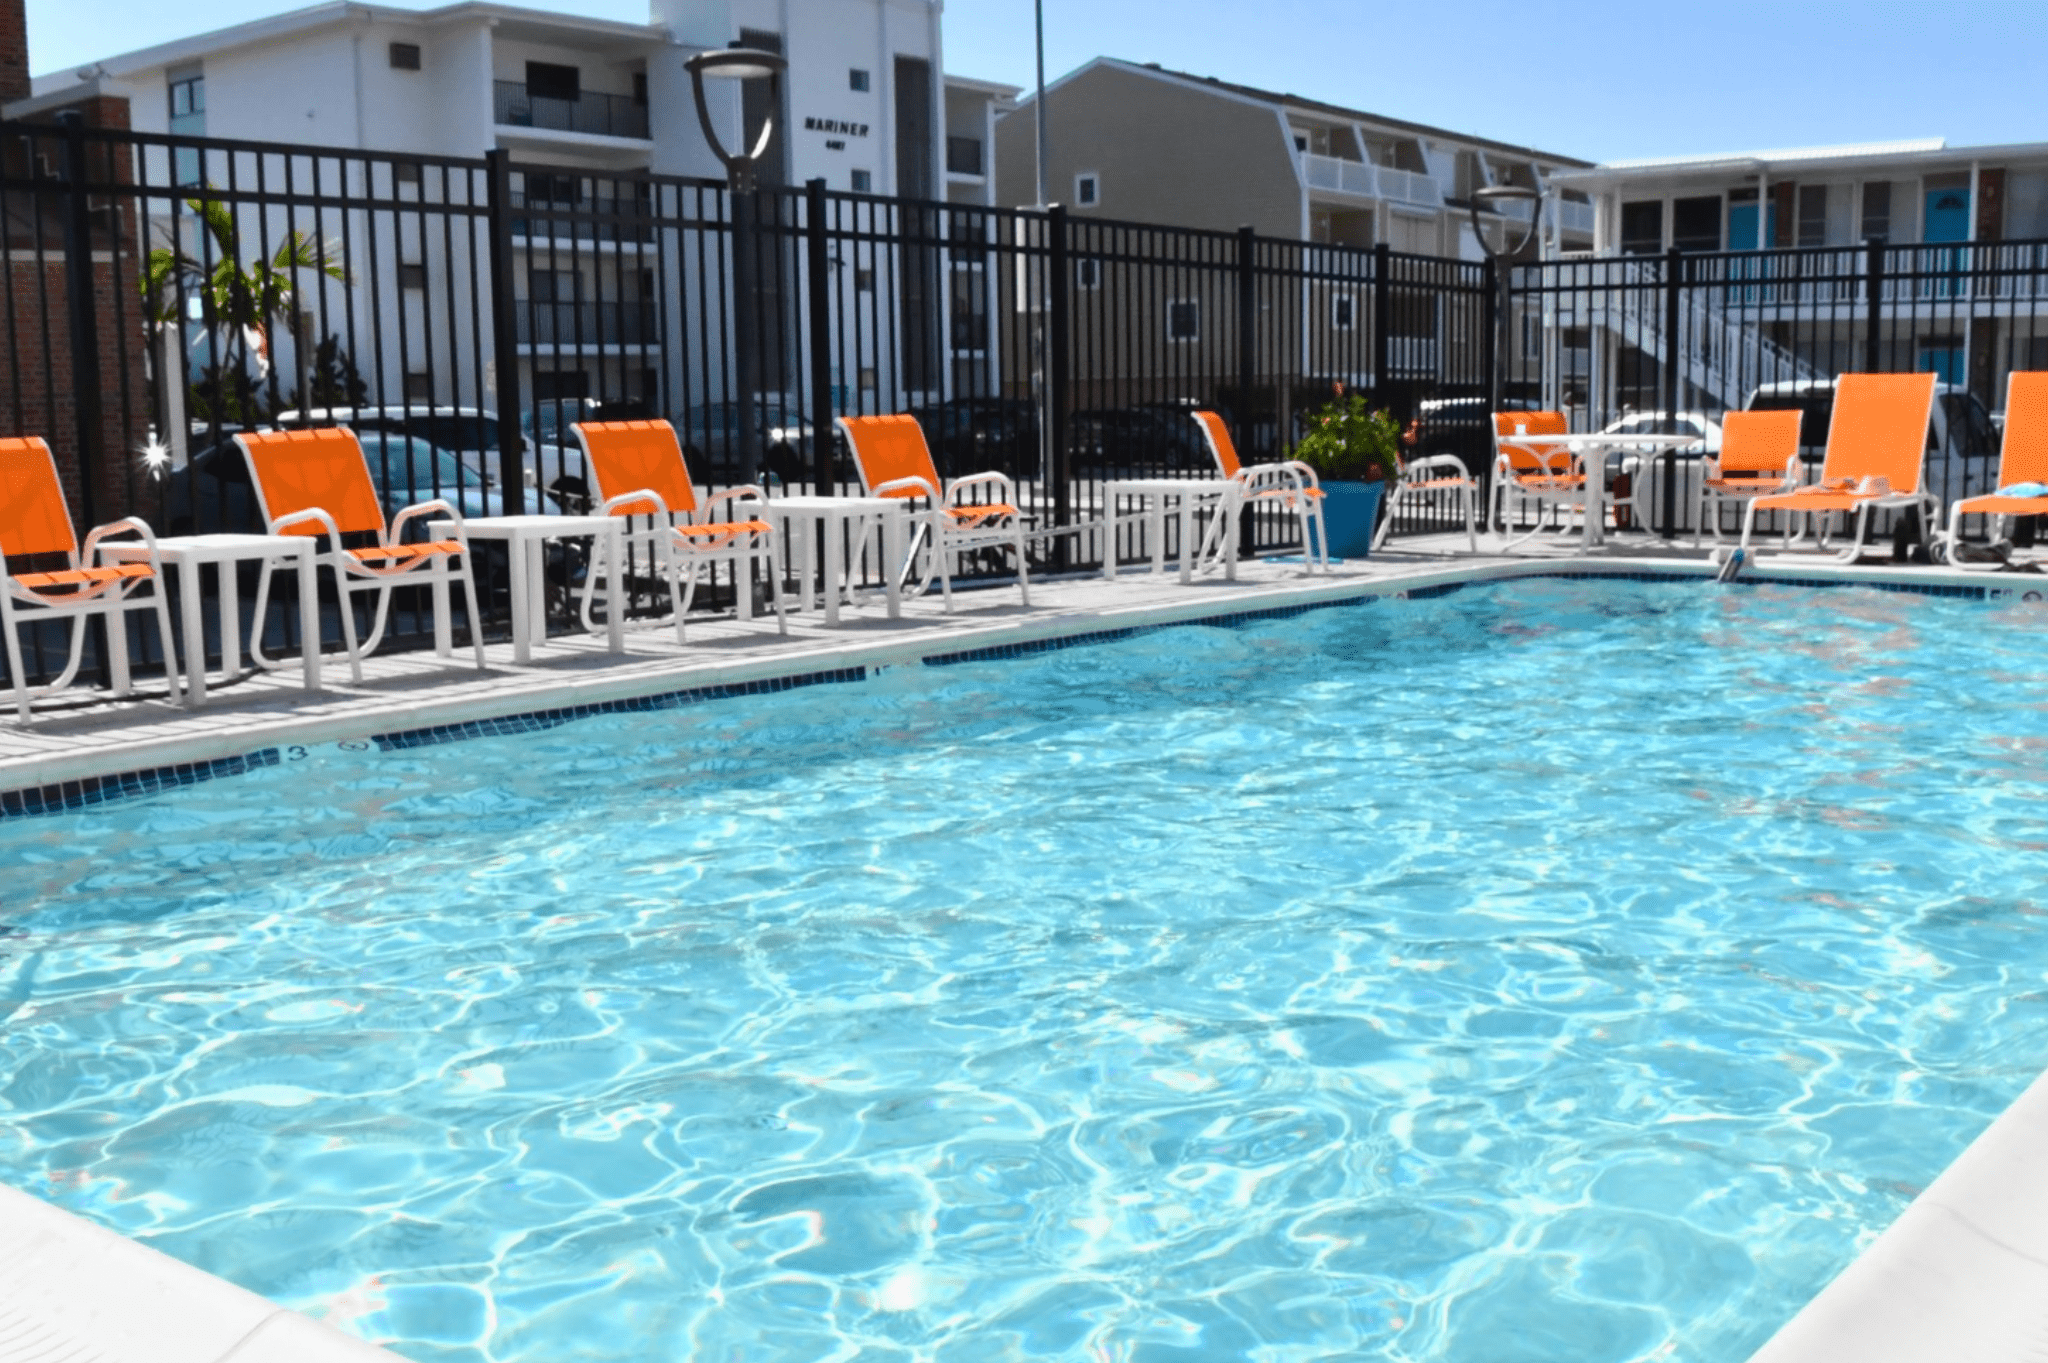 Hotel Pool, Ocean City, MD